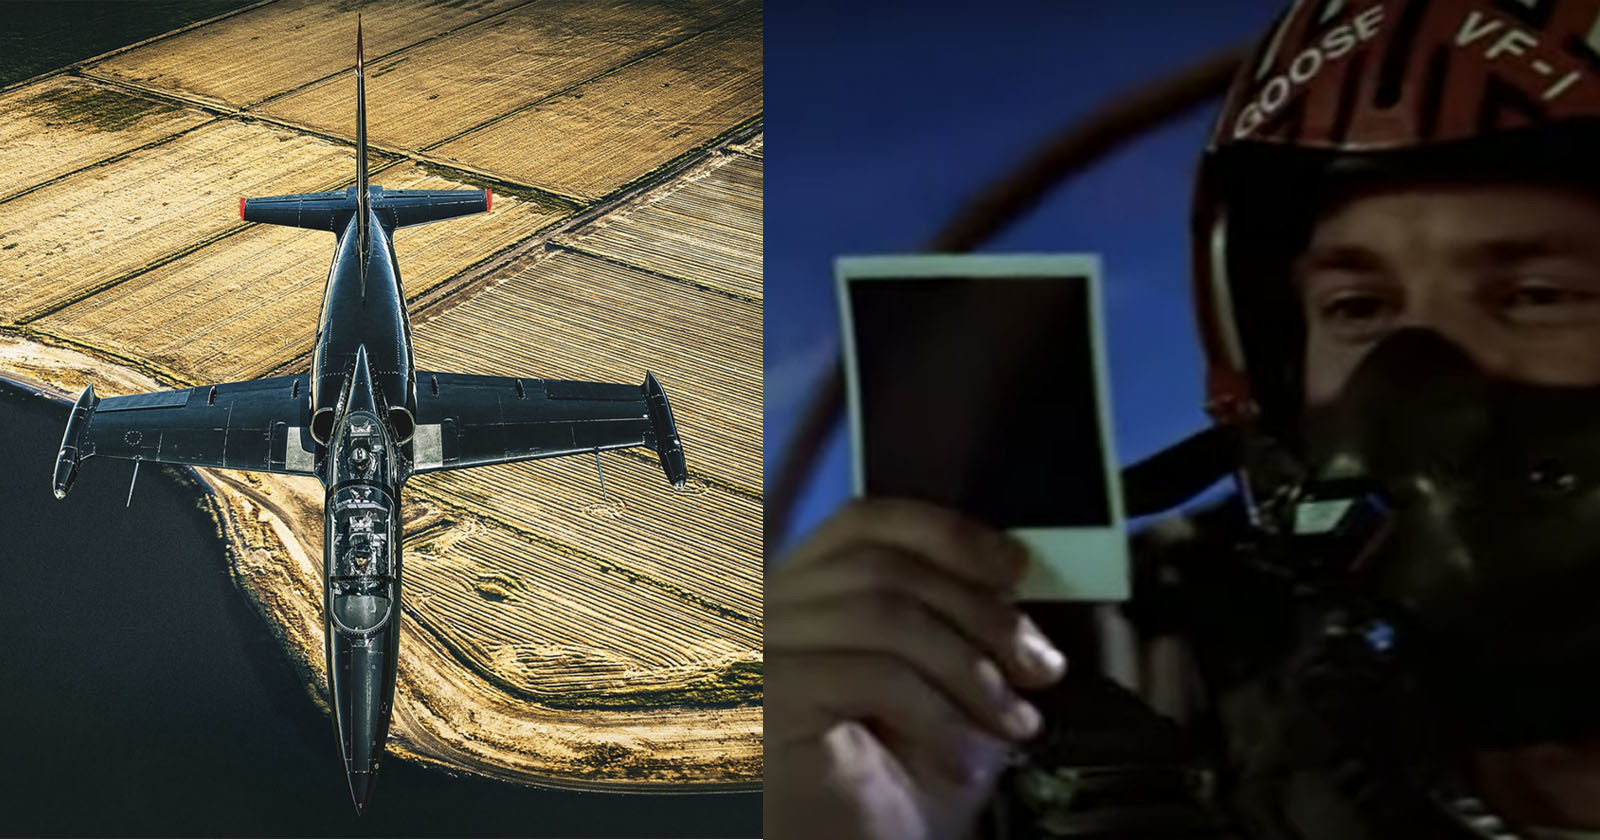  photographer recreated iconic gun jet-to-jet photo scene 